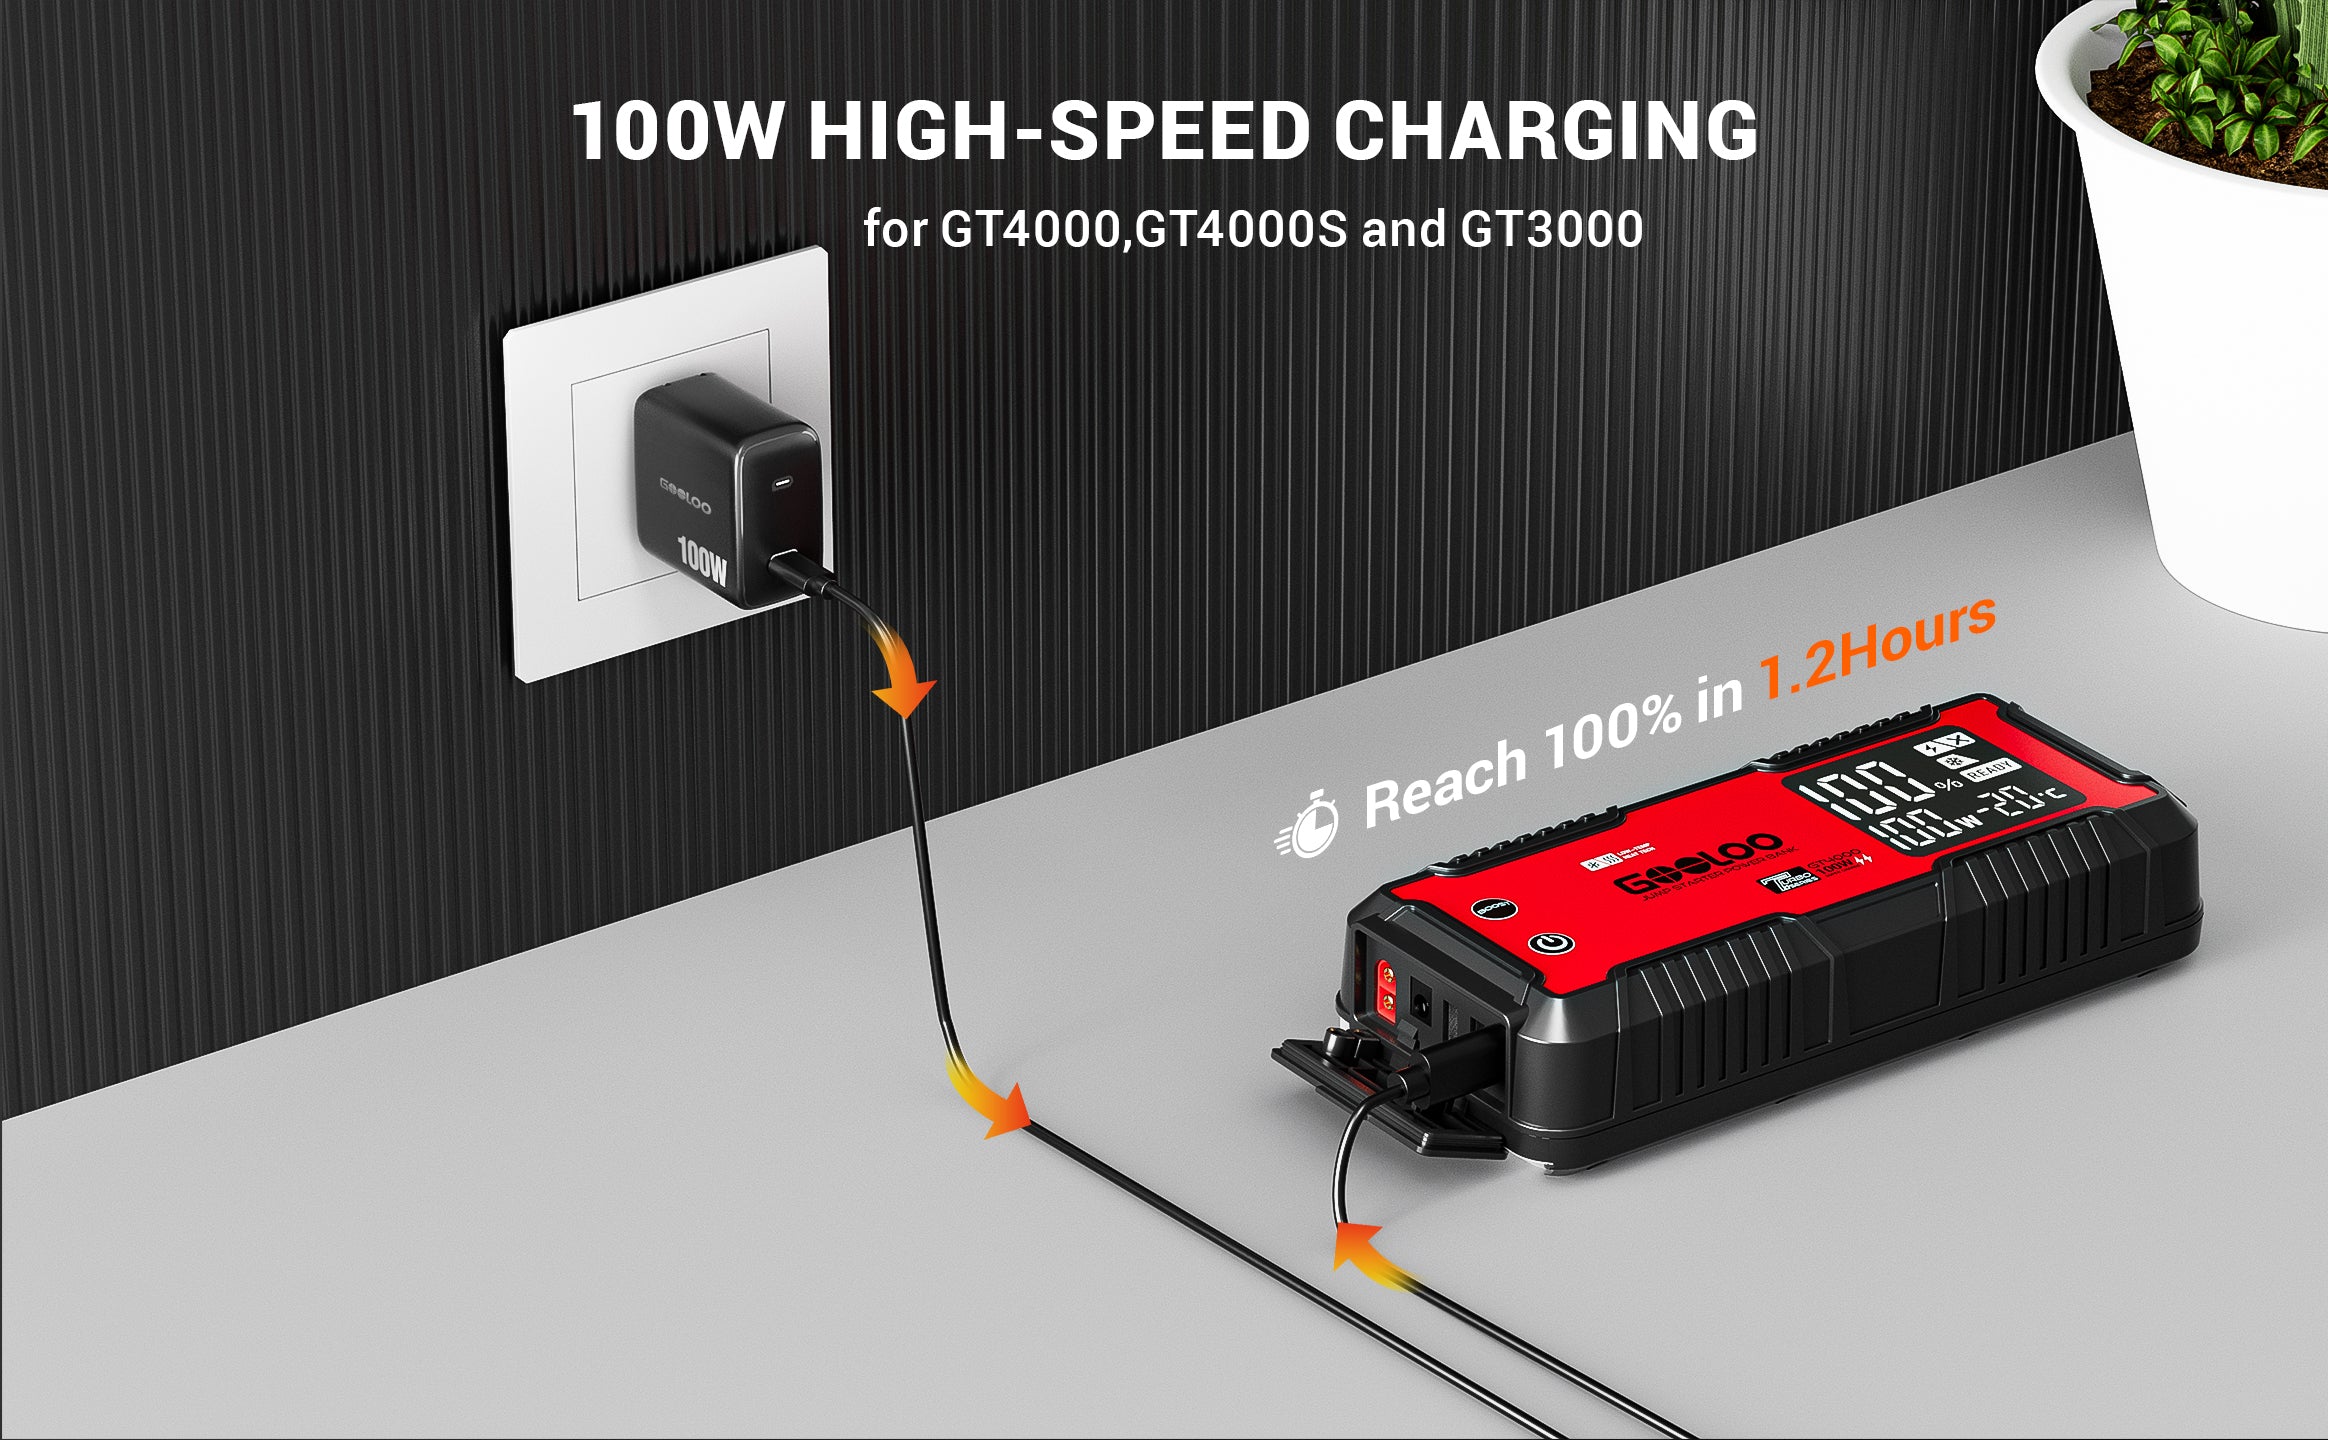 Chargeur mural 100 W pour charge haute vitesse gt4000 gt3000 gt4000s